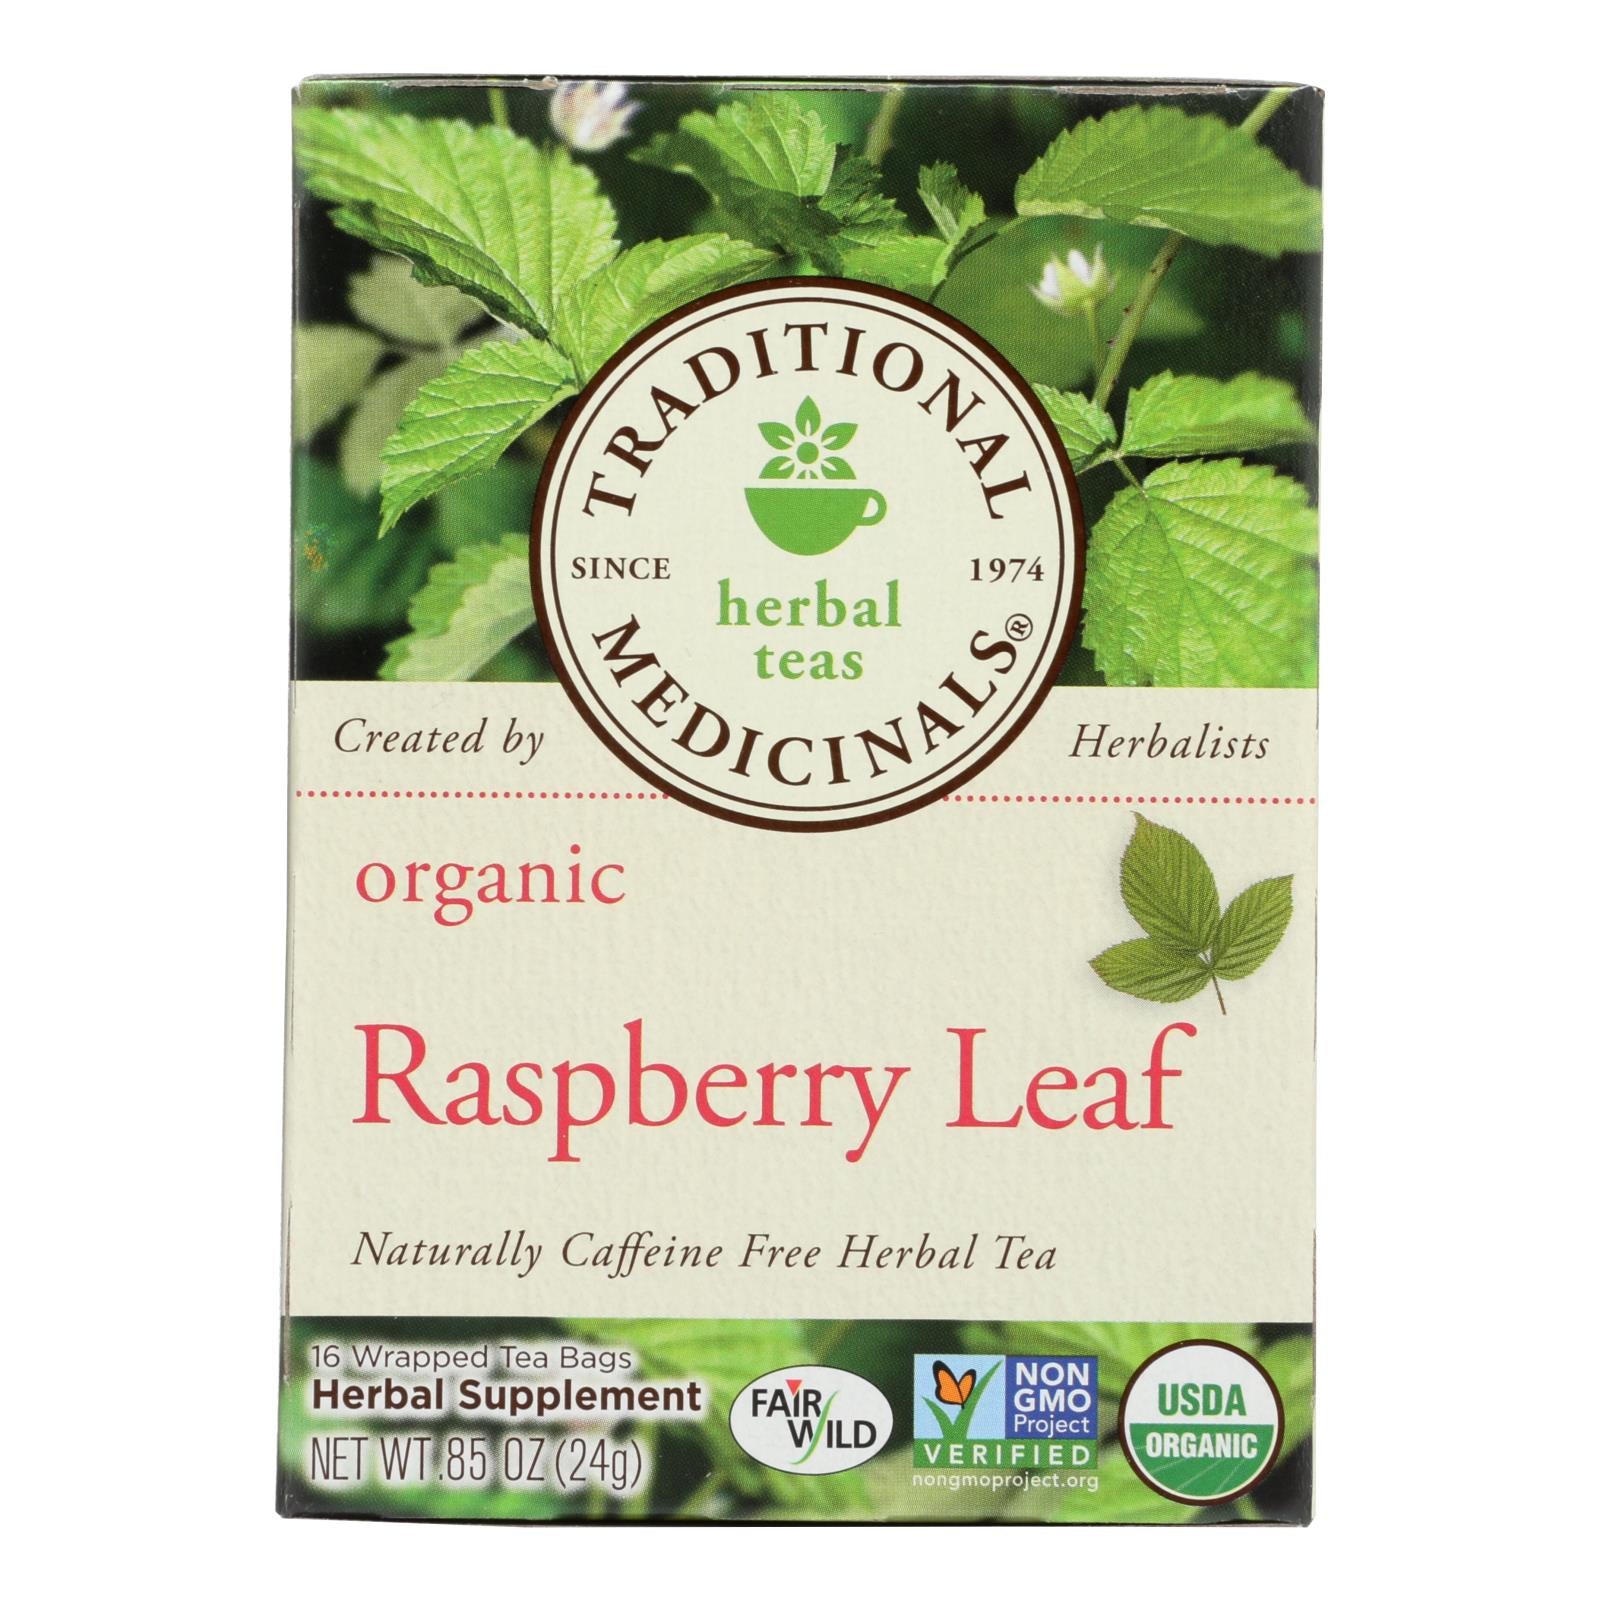 Traditional Medicinals Organic Raspberry Leaf Herbal Tea - Caffeine Free - 16 Bags